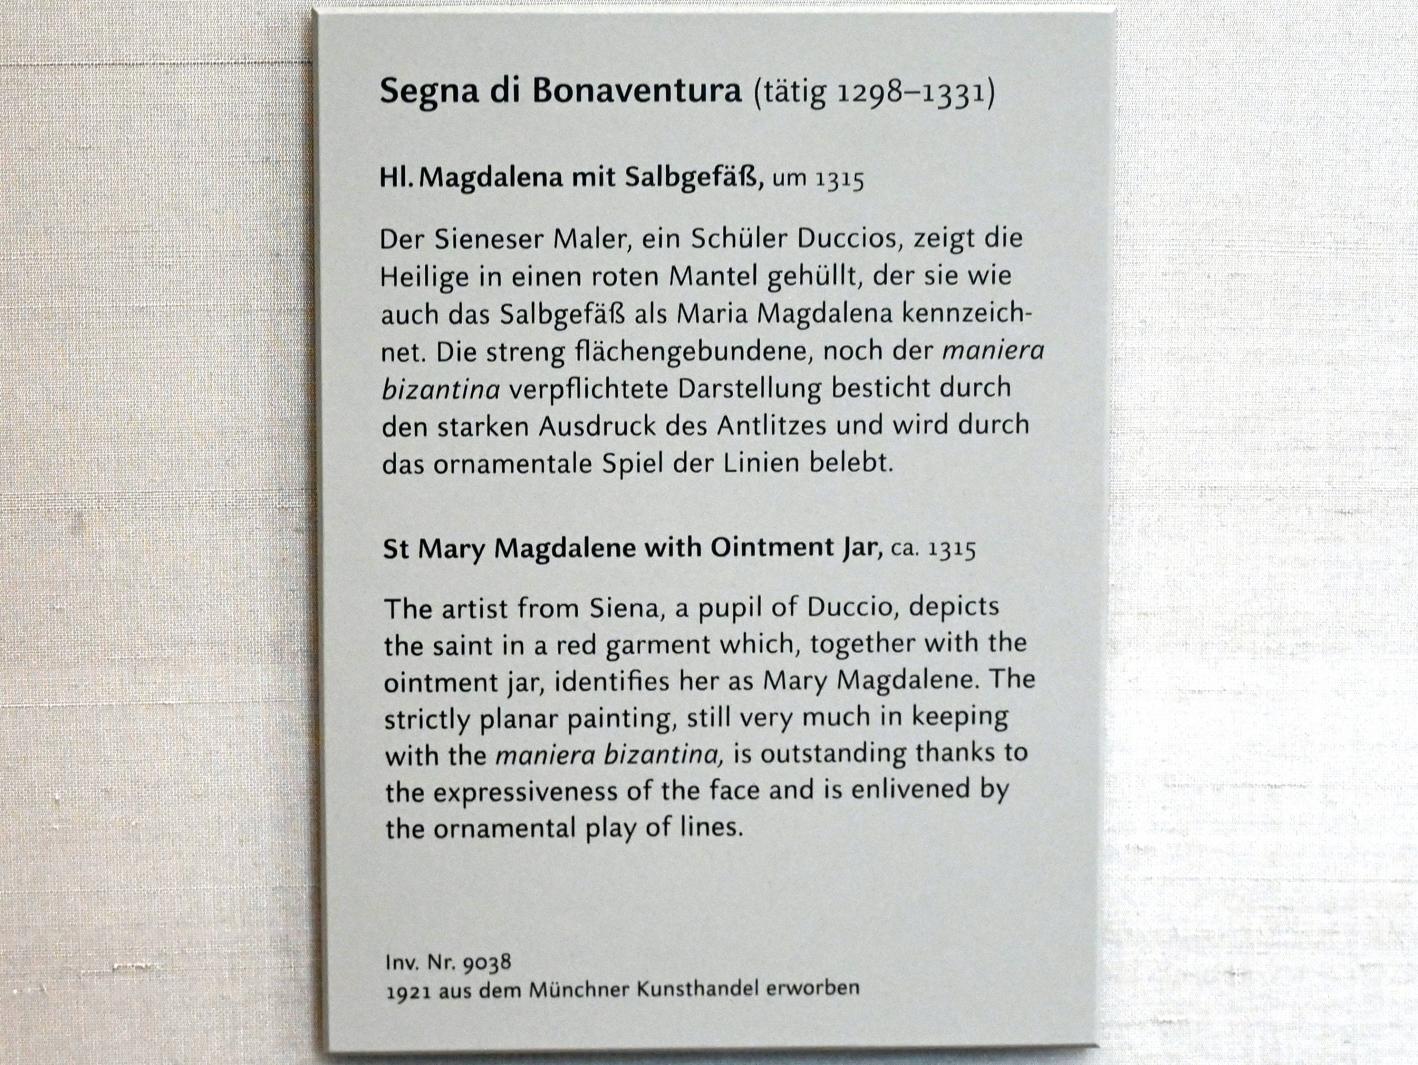 Segna di Bonaventura (1312–1315), Hl. Magdalena mit Salbgefäß, München, Alte Pinakothek, Obergeschoss Kabinett 1, um 1315, Bild 2/2